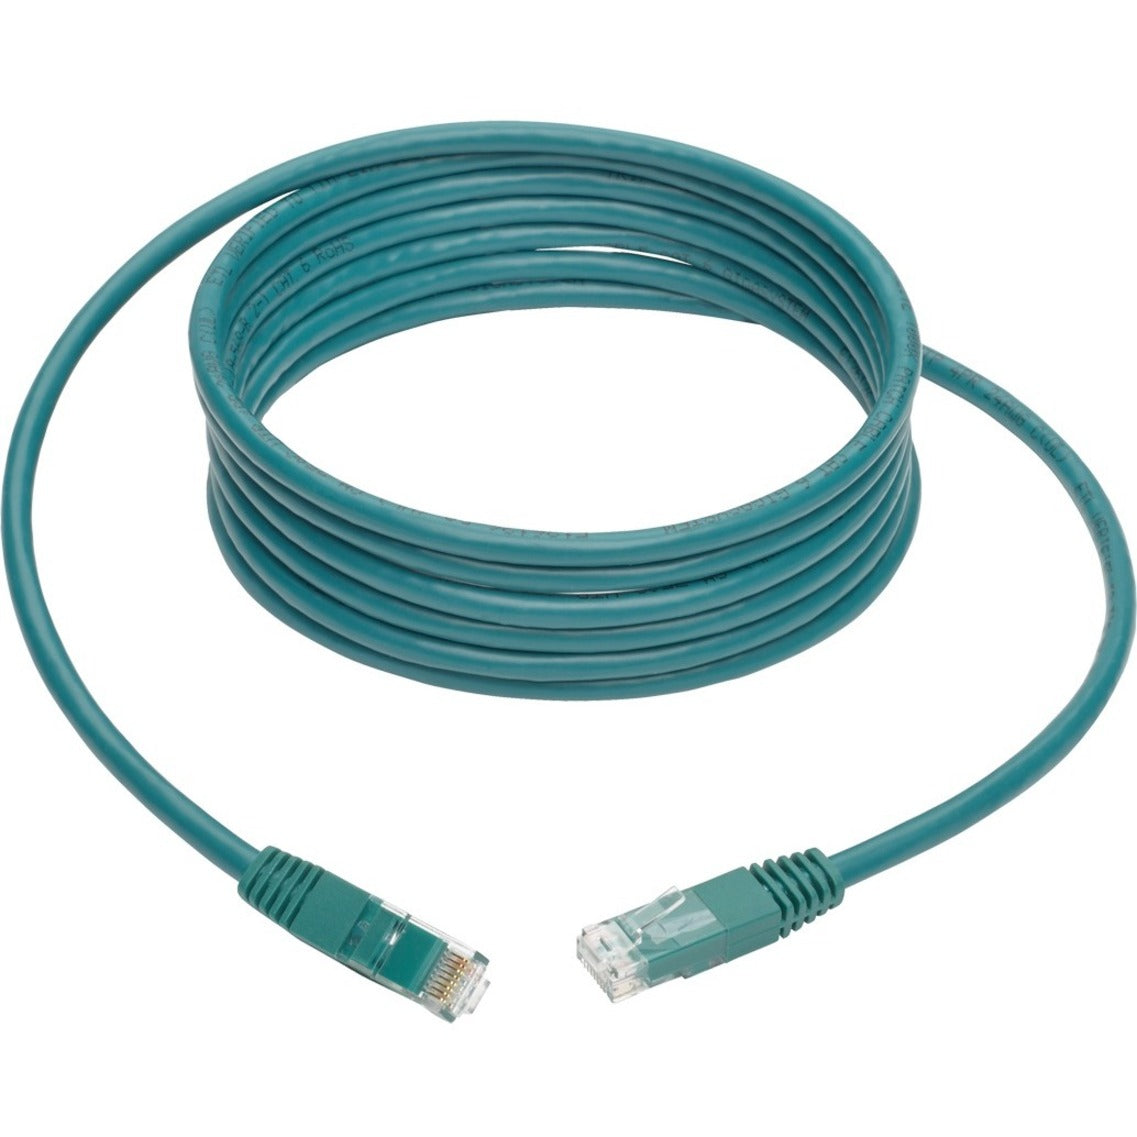 Tripp Lite N200-010-GN Cat6 Gigabit Molded Patch Cable (RJ45 M/M), Green, 10 ft, Stress Resistant, Flexible, Corrosion Resistant, Strain Relief